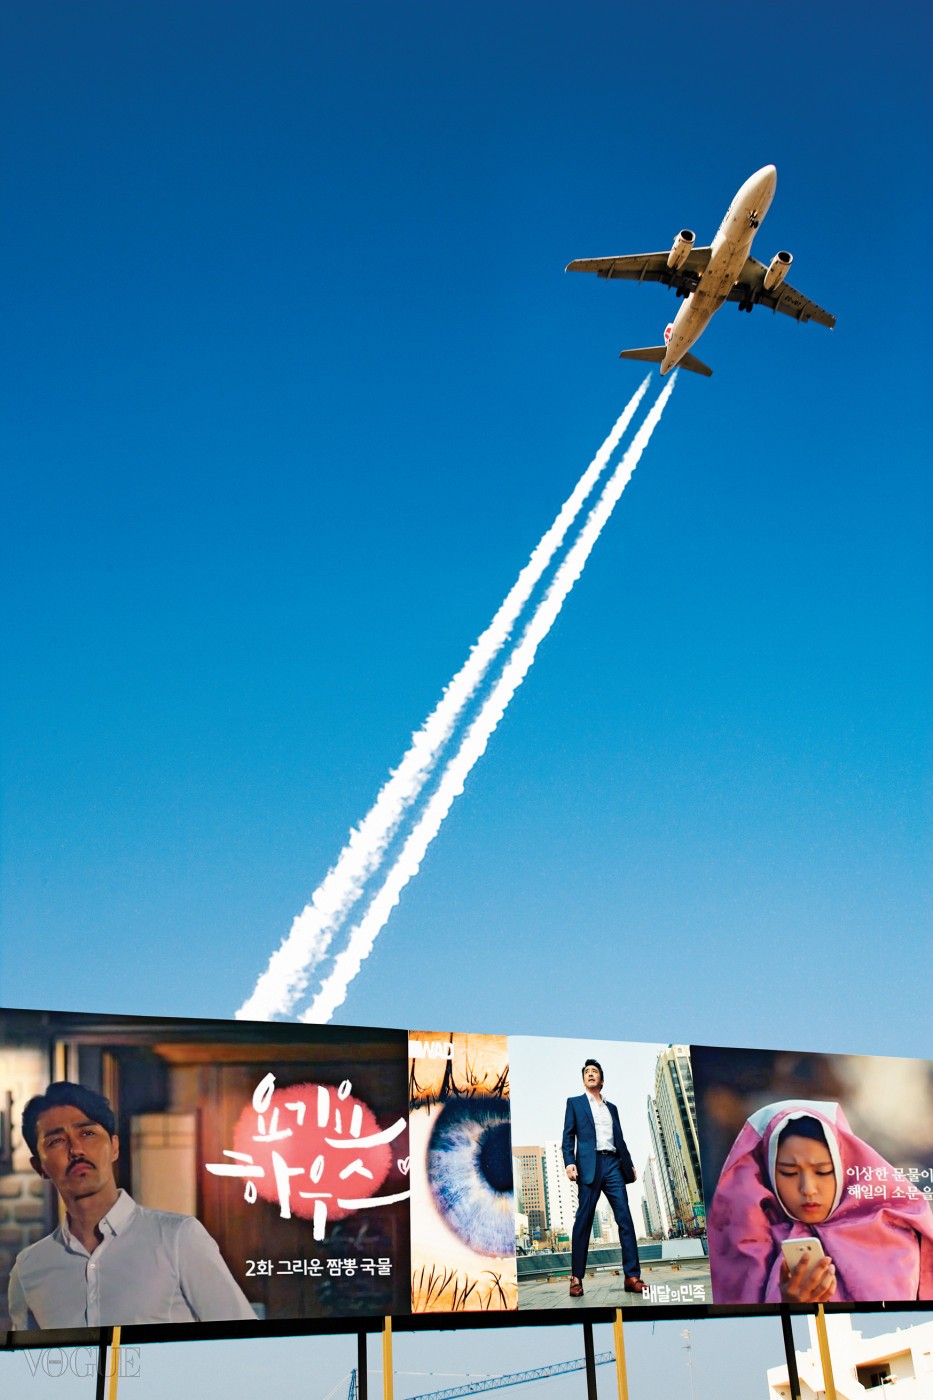 planes flying over poster advertising clubs,  landing into Ibiza airport,  Ibiza, Balearics, Spain. ©Naki Kouyioumtzis/ Axiom.